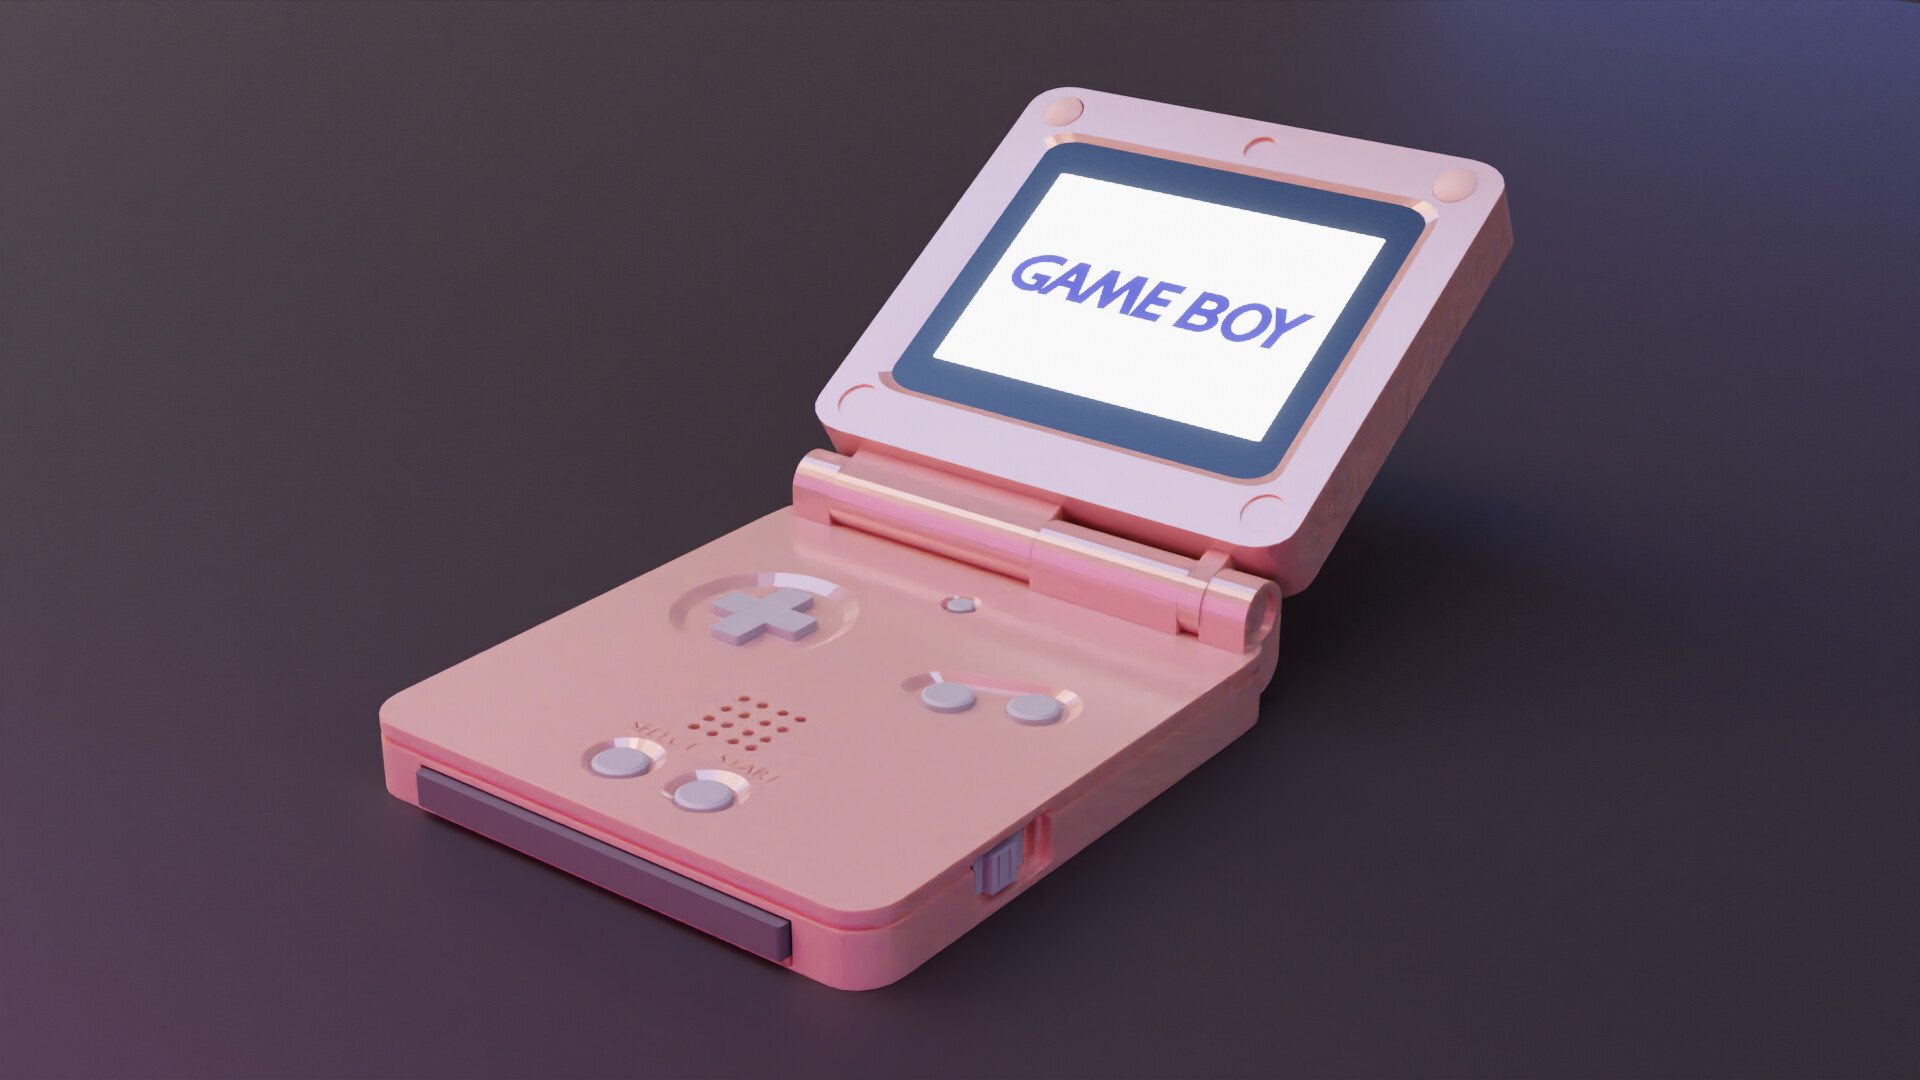 Nintendo модели. Геймбой 3д. Game boy Advance SP розовая. Nintendo game boy Advance SP.